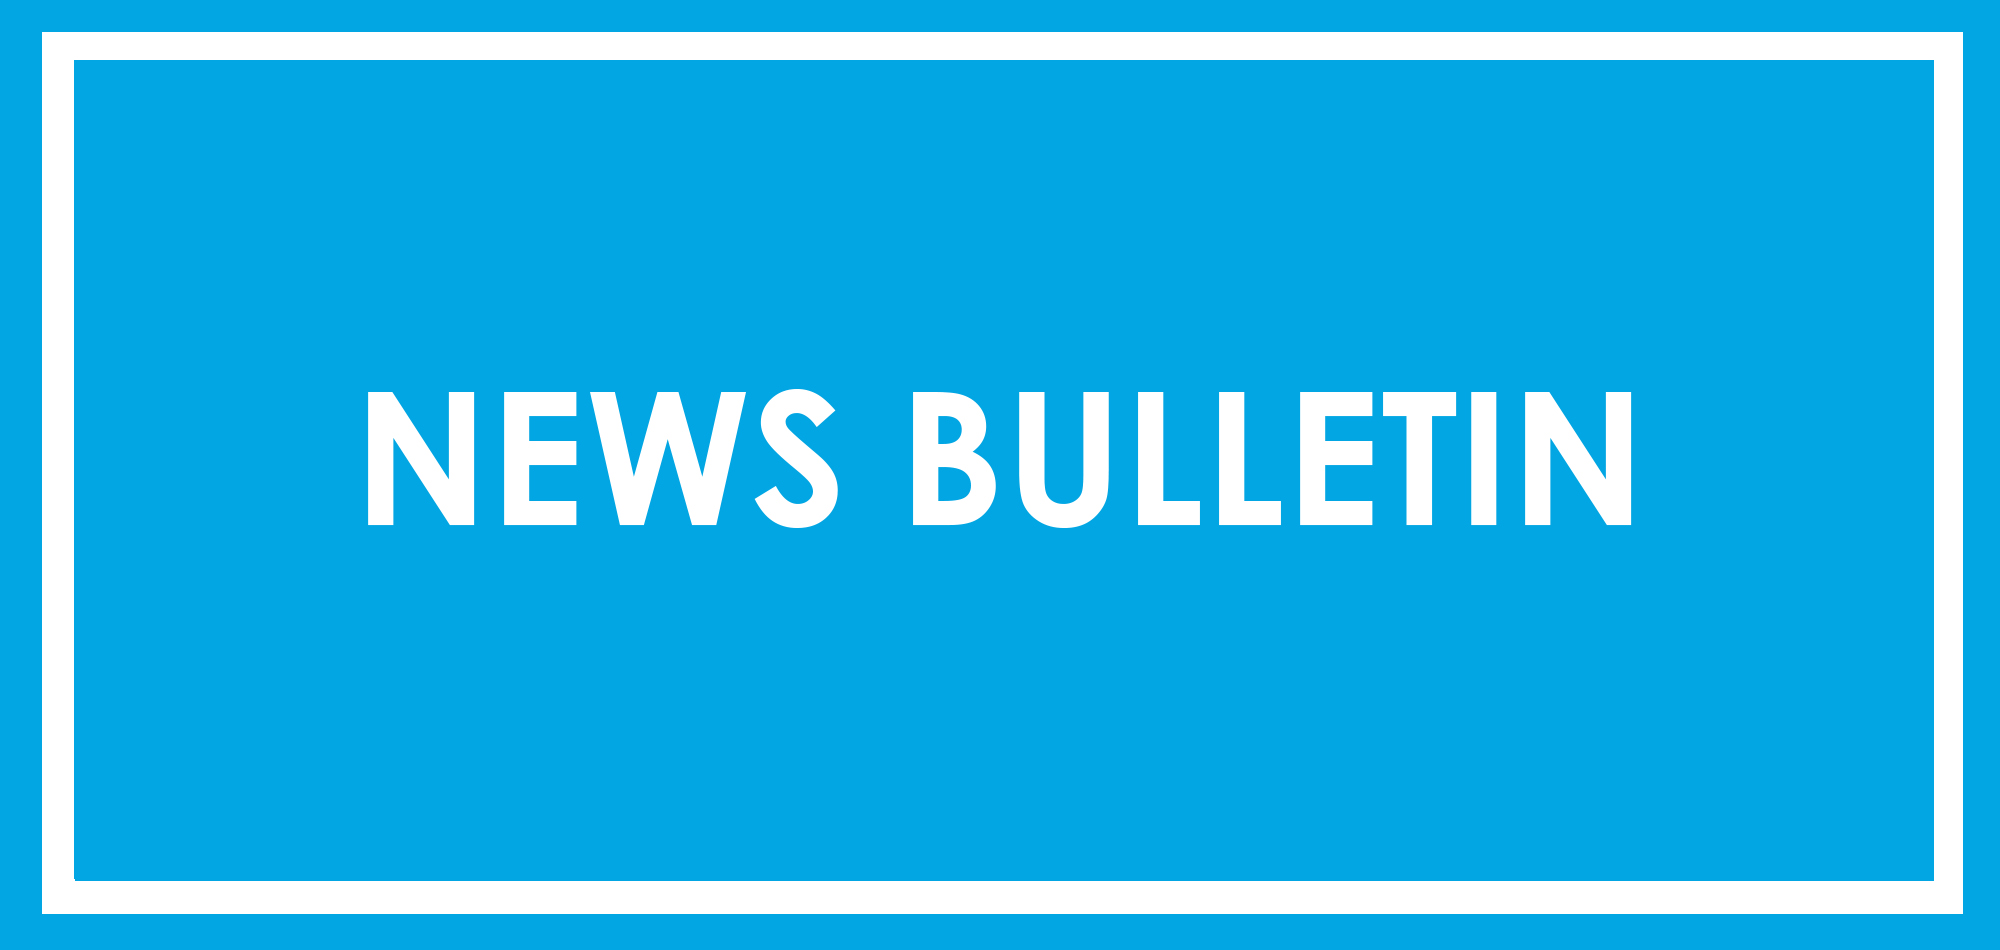 News Bulletin - 11.11.21